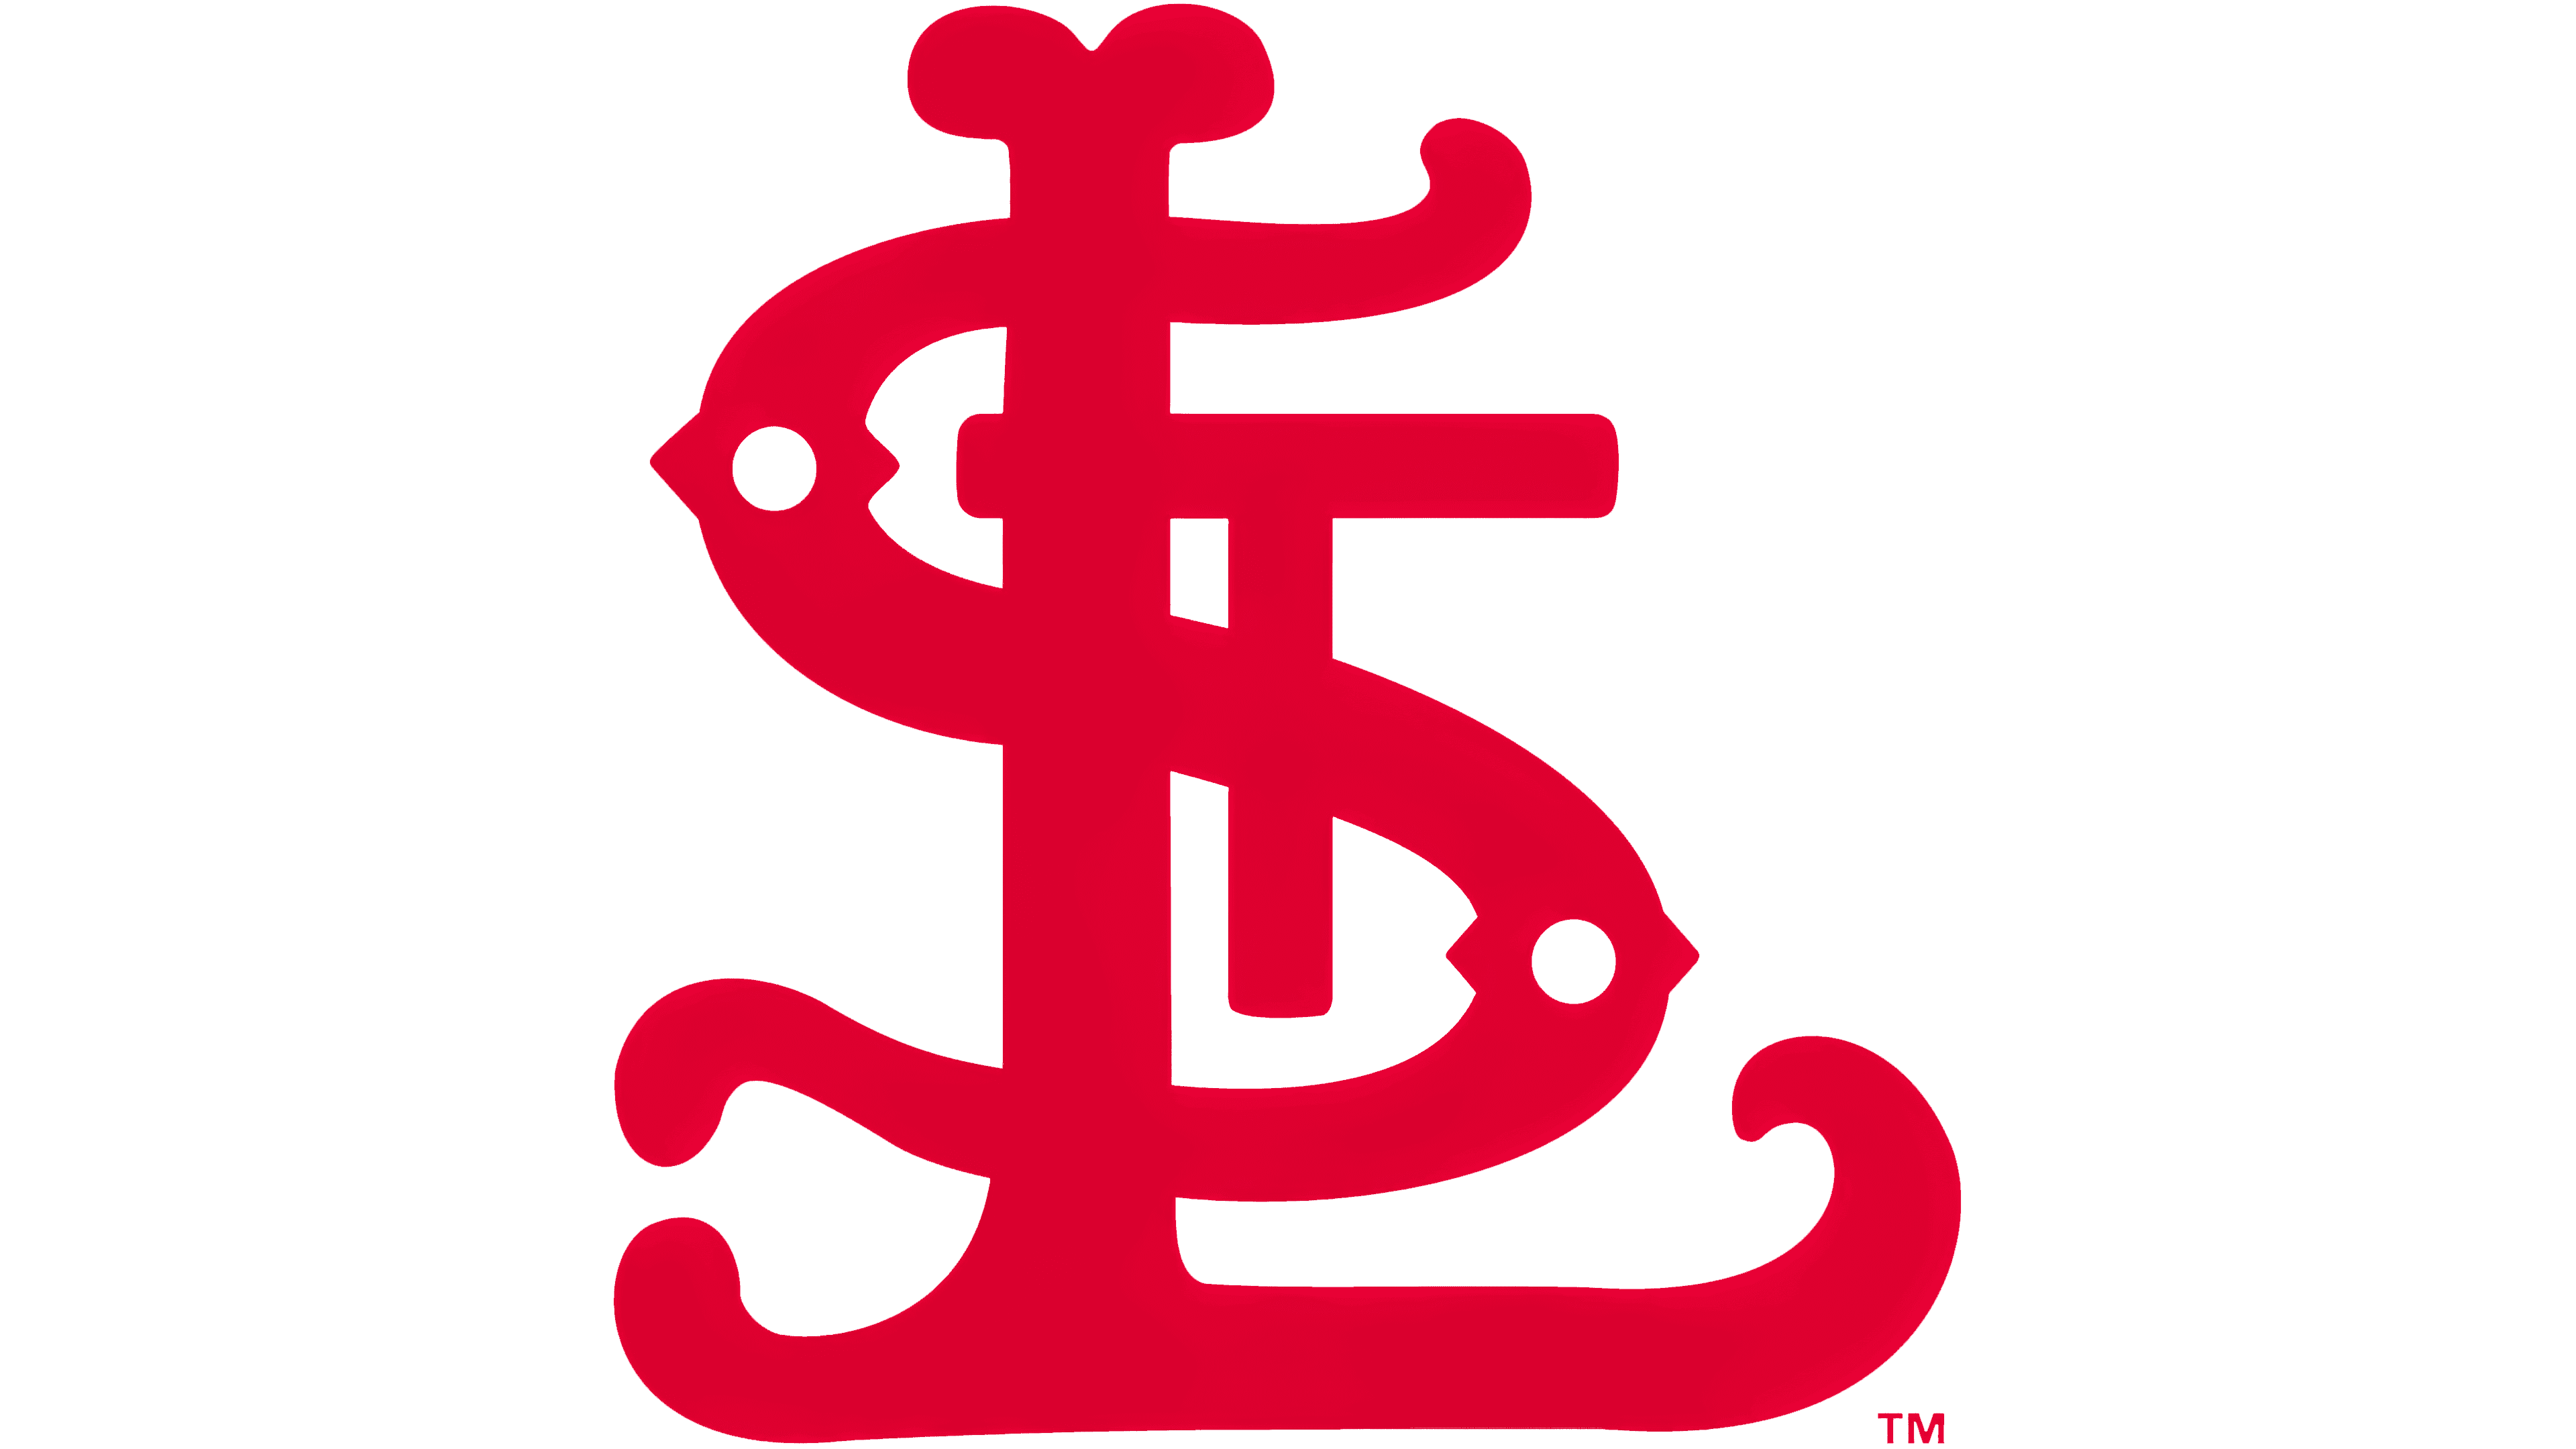 St. Louis Cardinals Logo | Symbol, History, PNG (3840*2160)